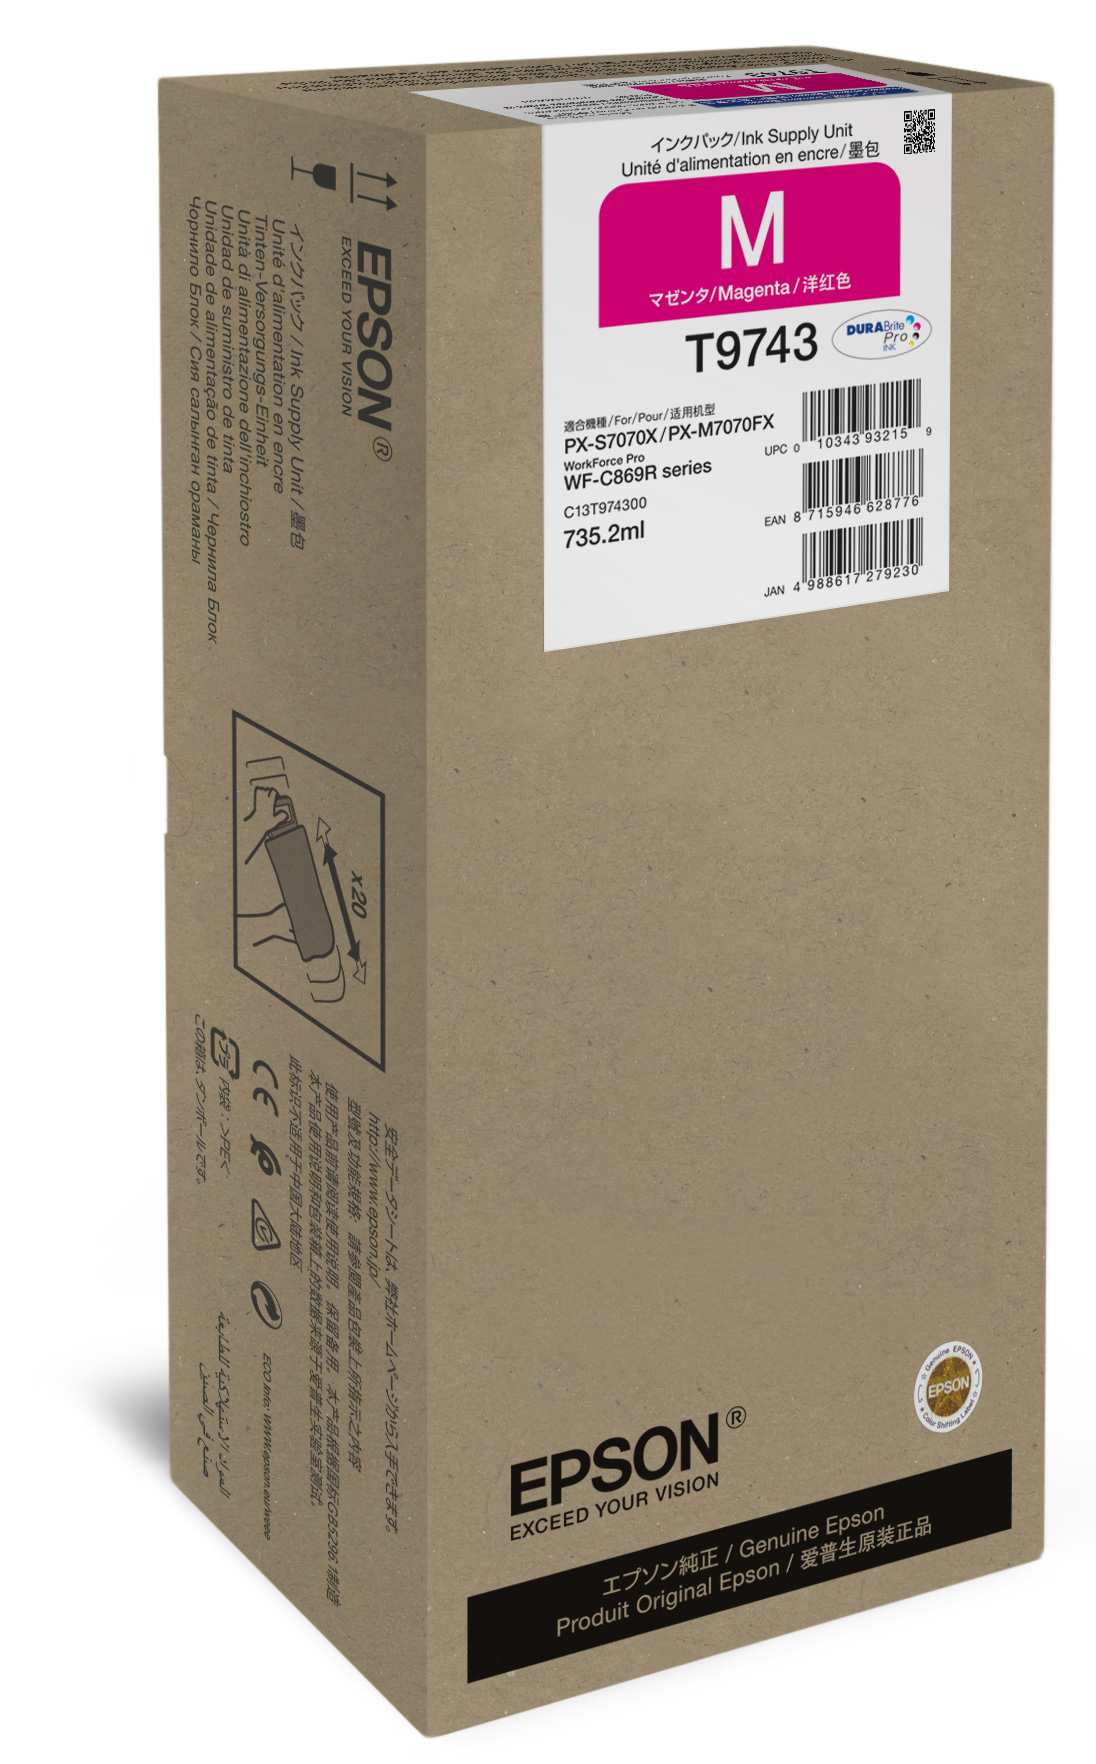 Epson Magenta XXL Ink Supply Unit single pack / magenta